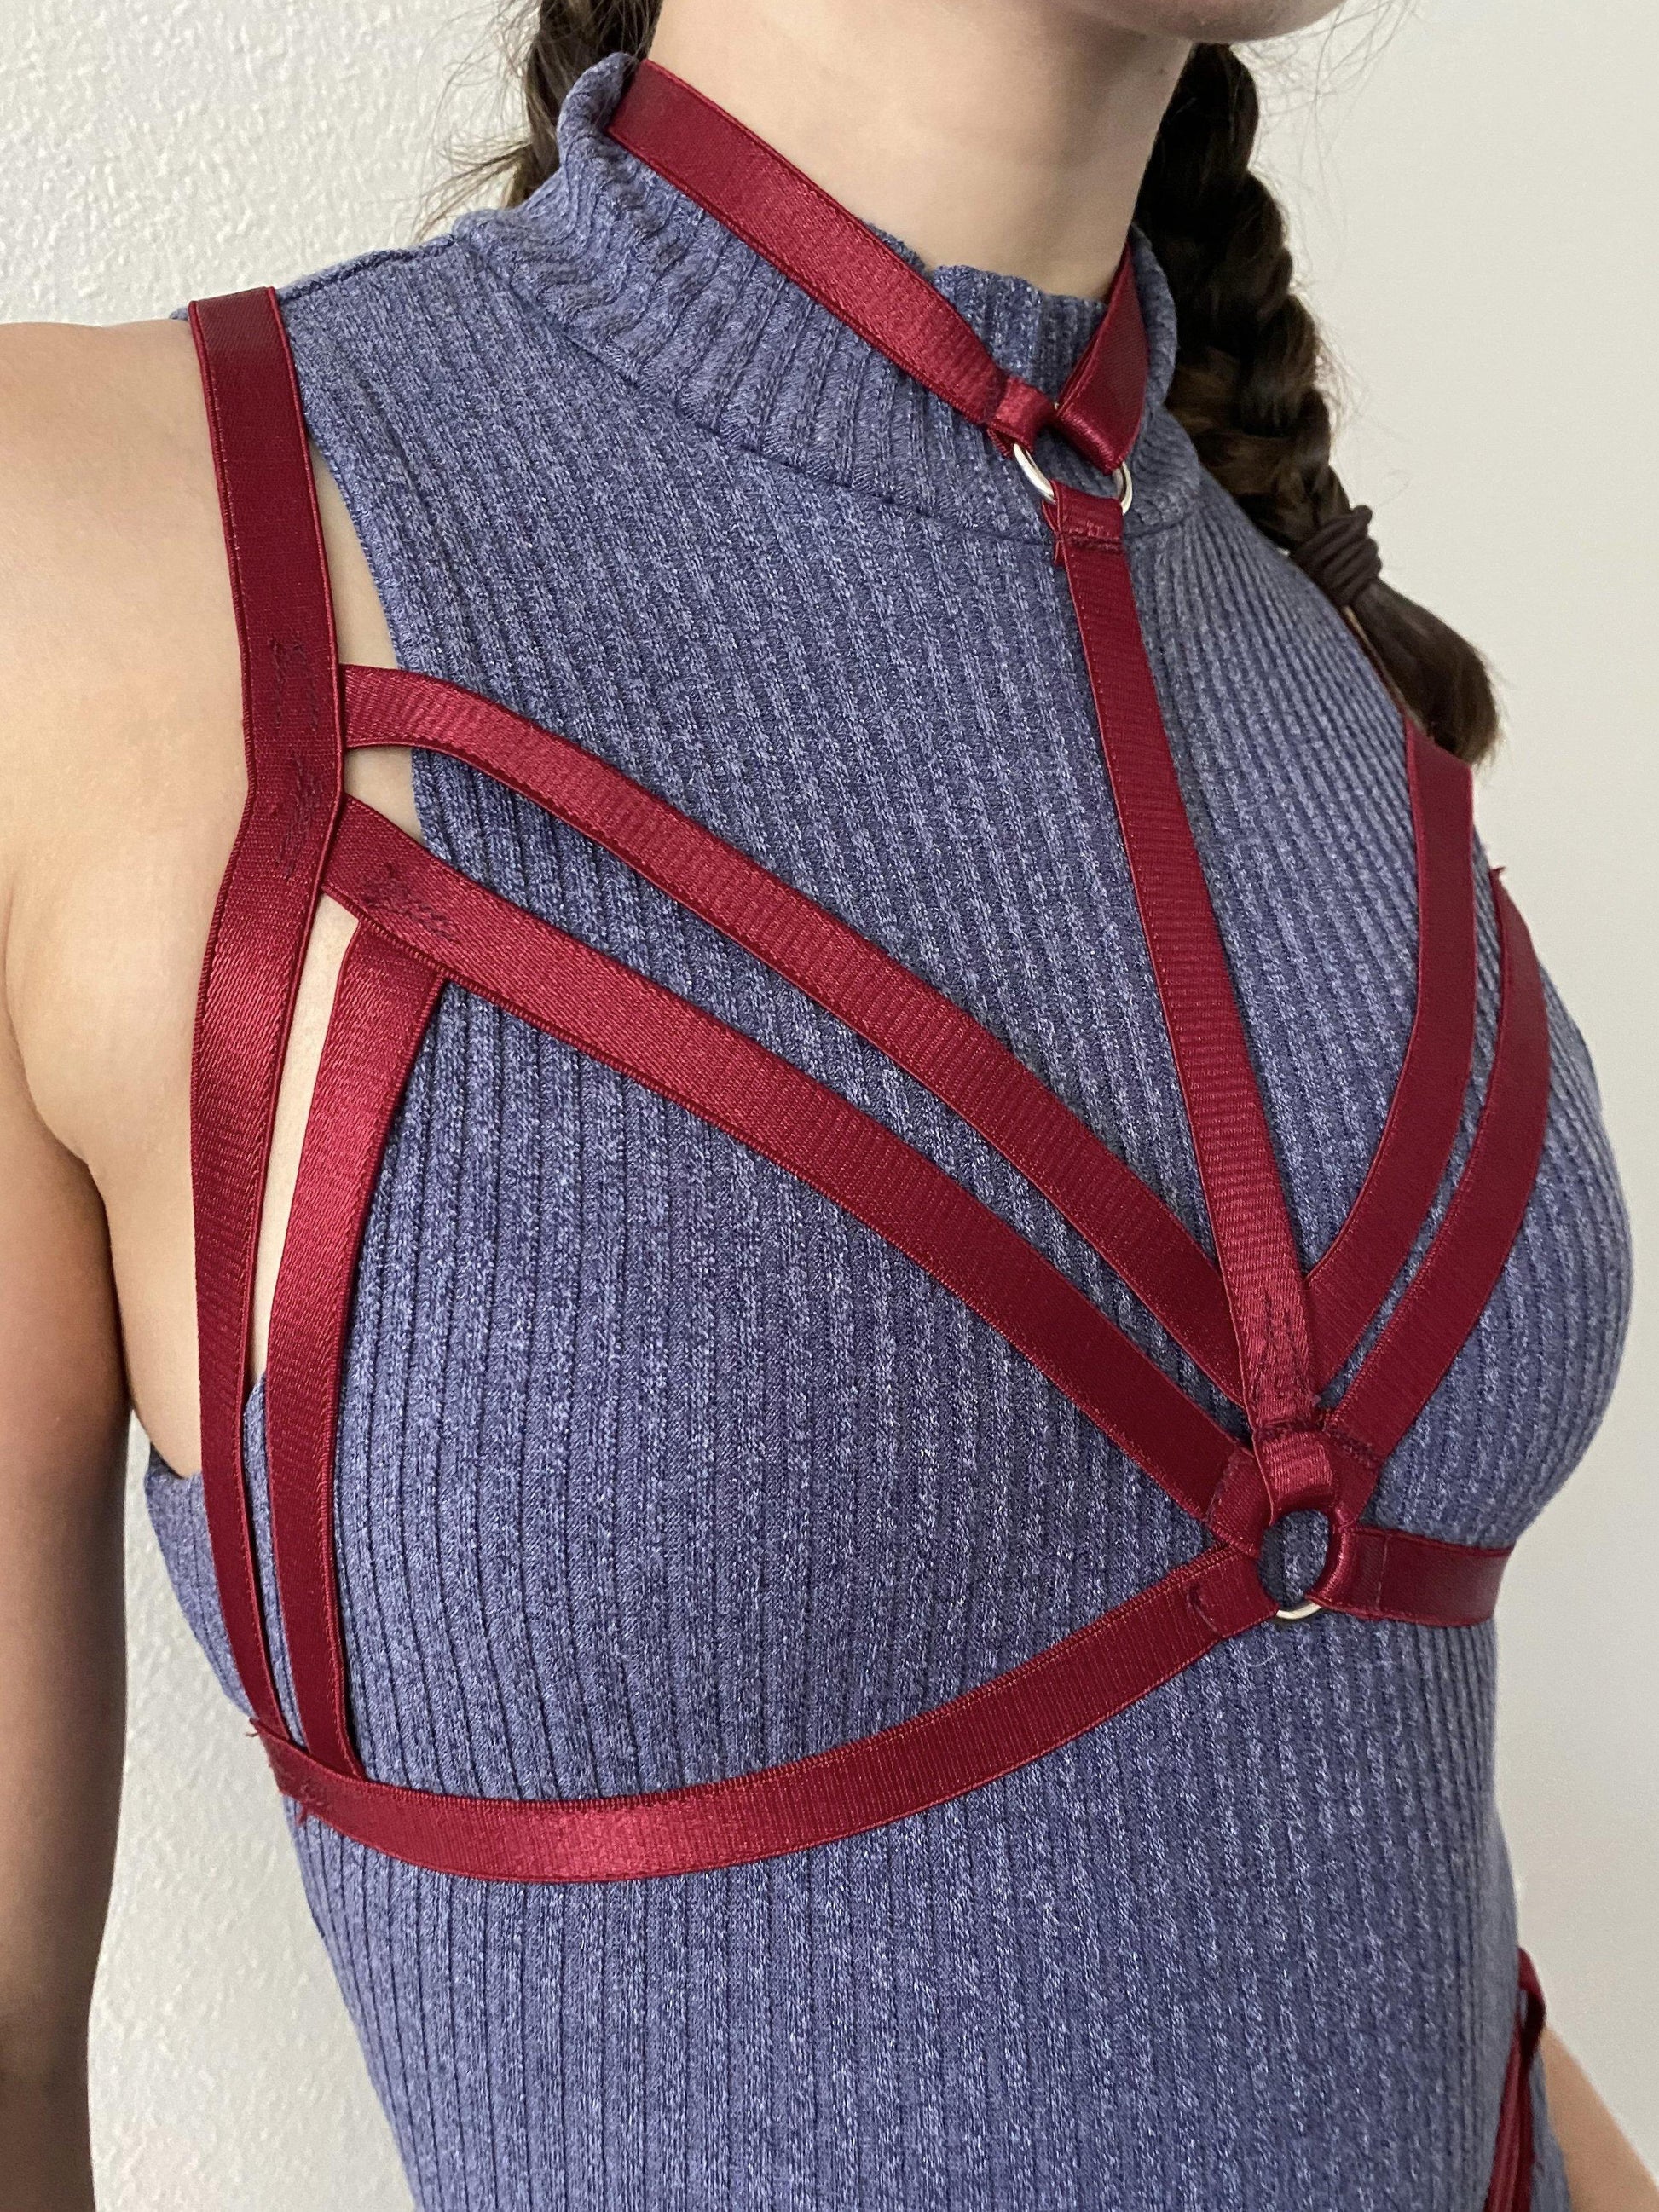 Something Sexy Harness Top BURGUNDY - Catrina Polewear